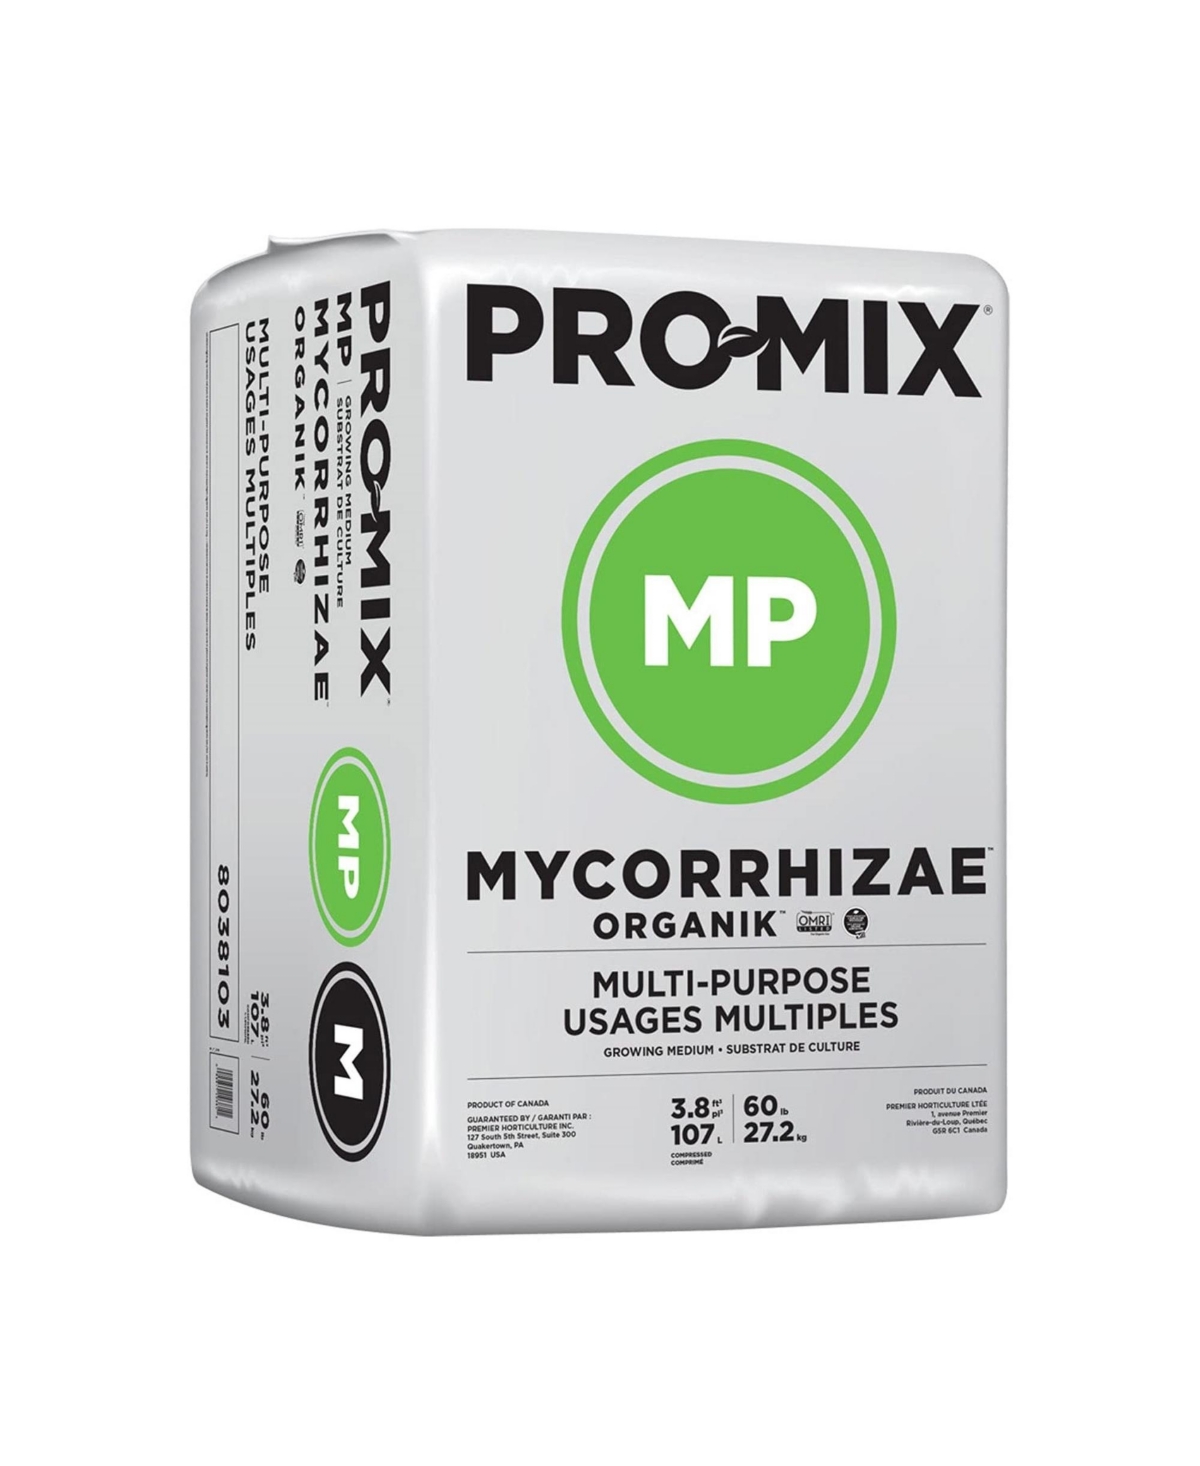 Premeir Horticulture Pro-mix Mp Mycorrhizae, Growing Medium 3.8 Cf - Multi